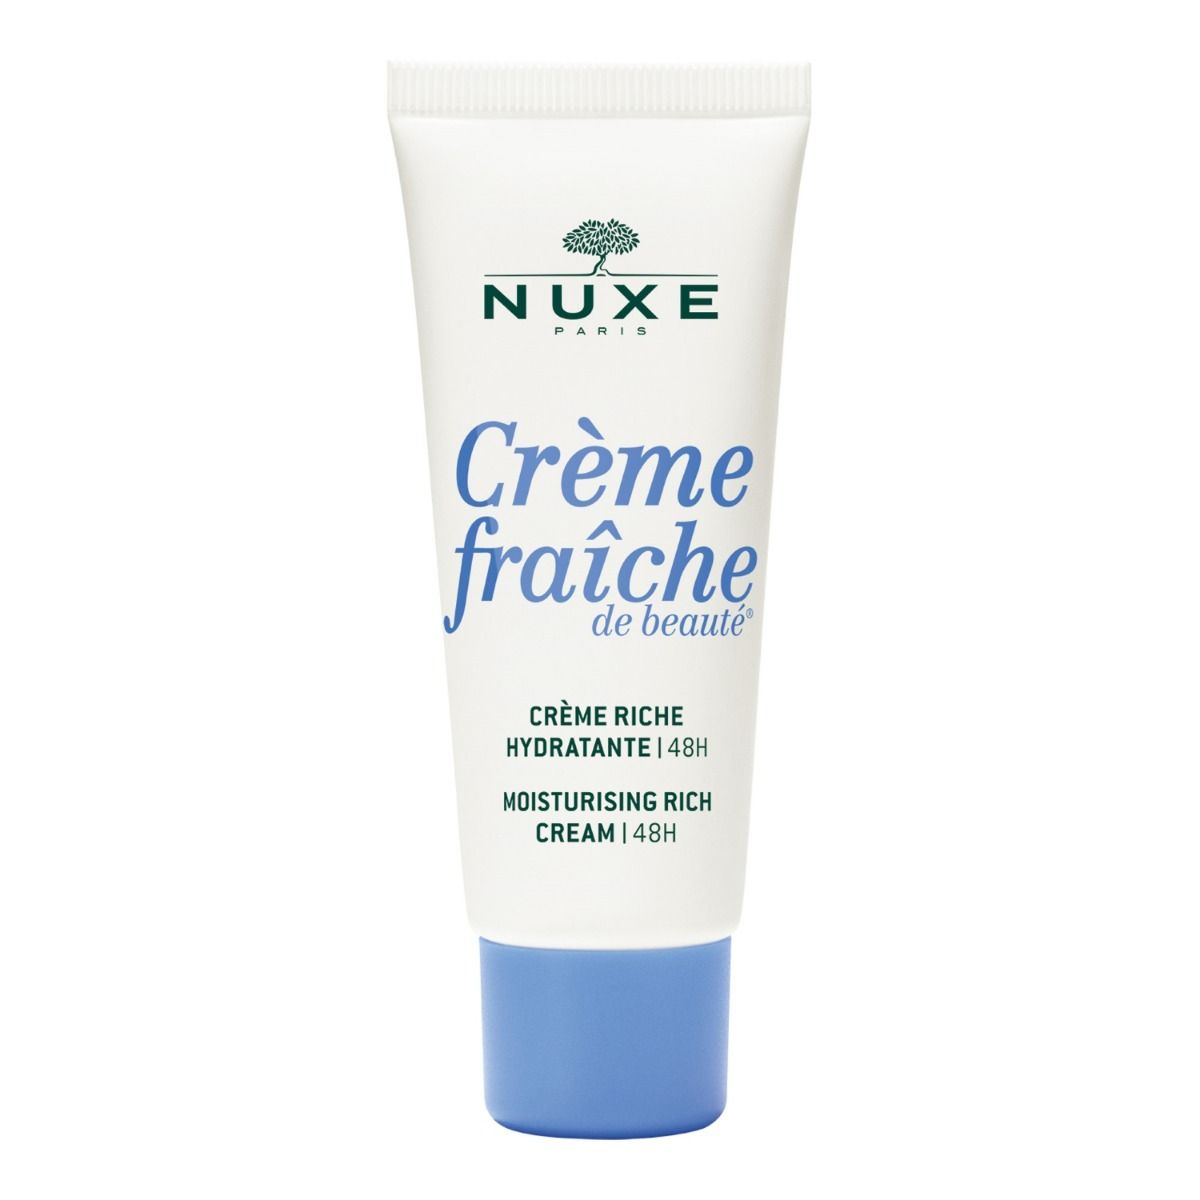 Nuxe Crème Fraîche de Beauté крем для лица, 30 ml масло сладкого миндаля de la cruz 59 мл